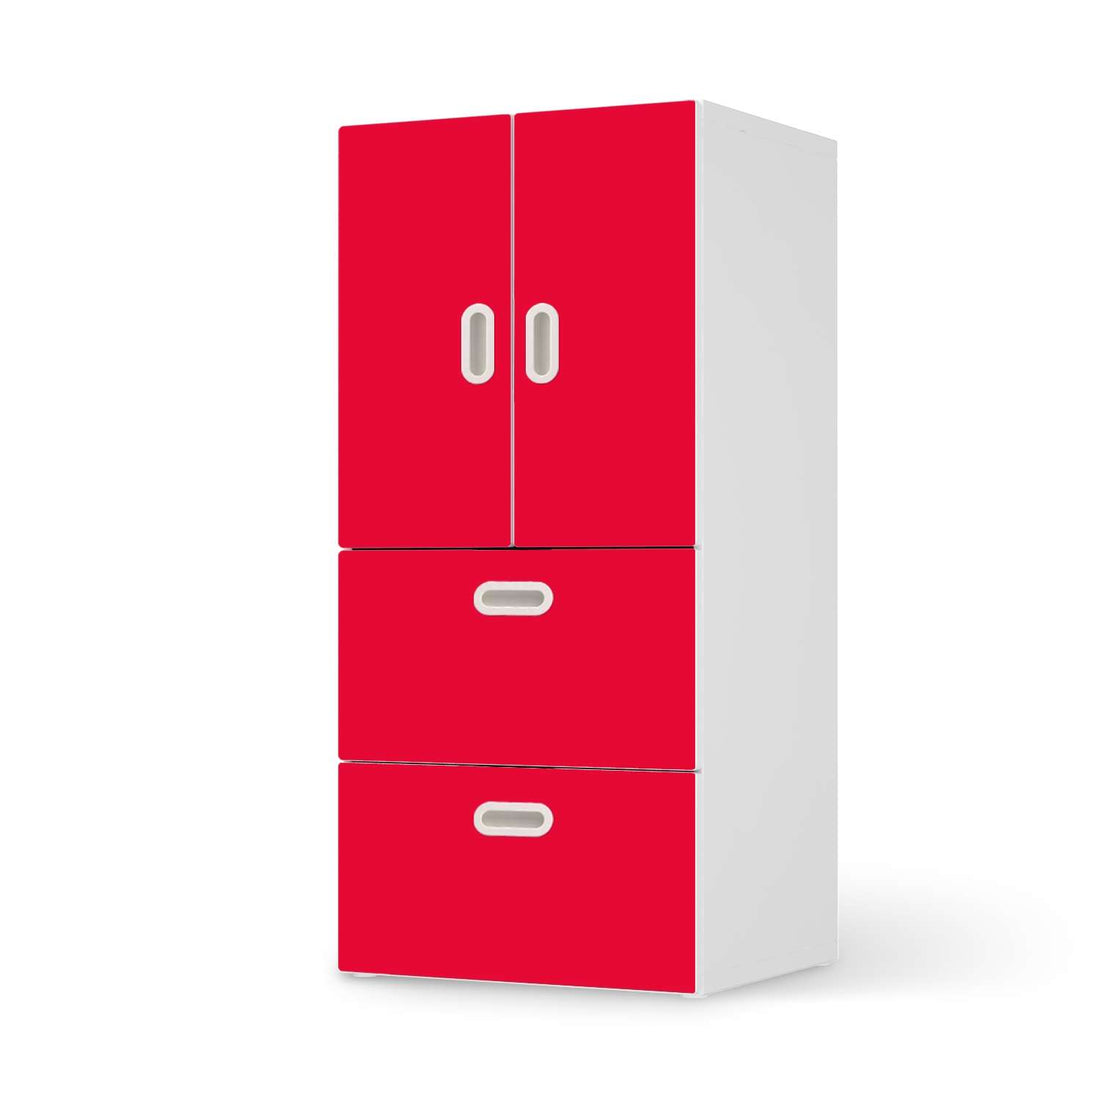 Möbelfolie Rot Light - IKEA Stuva / Fritids kombiniert - 2 Schubladen und 2 kleine Türen  - weiss